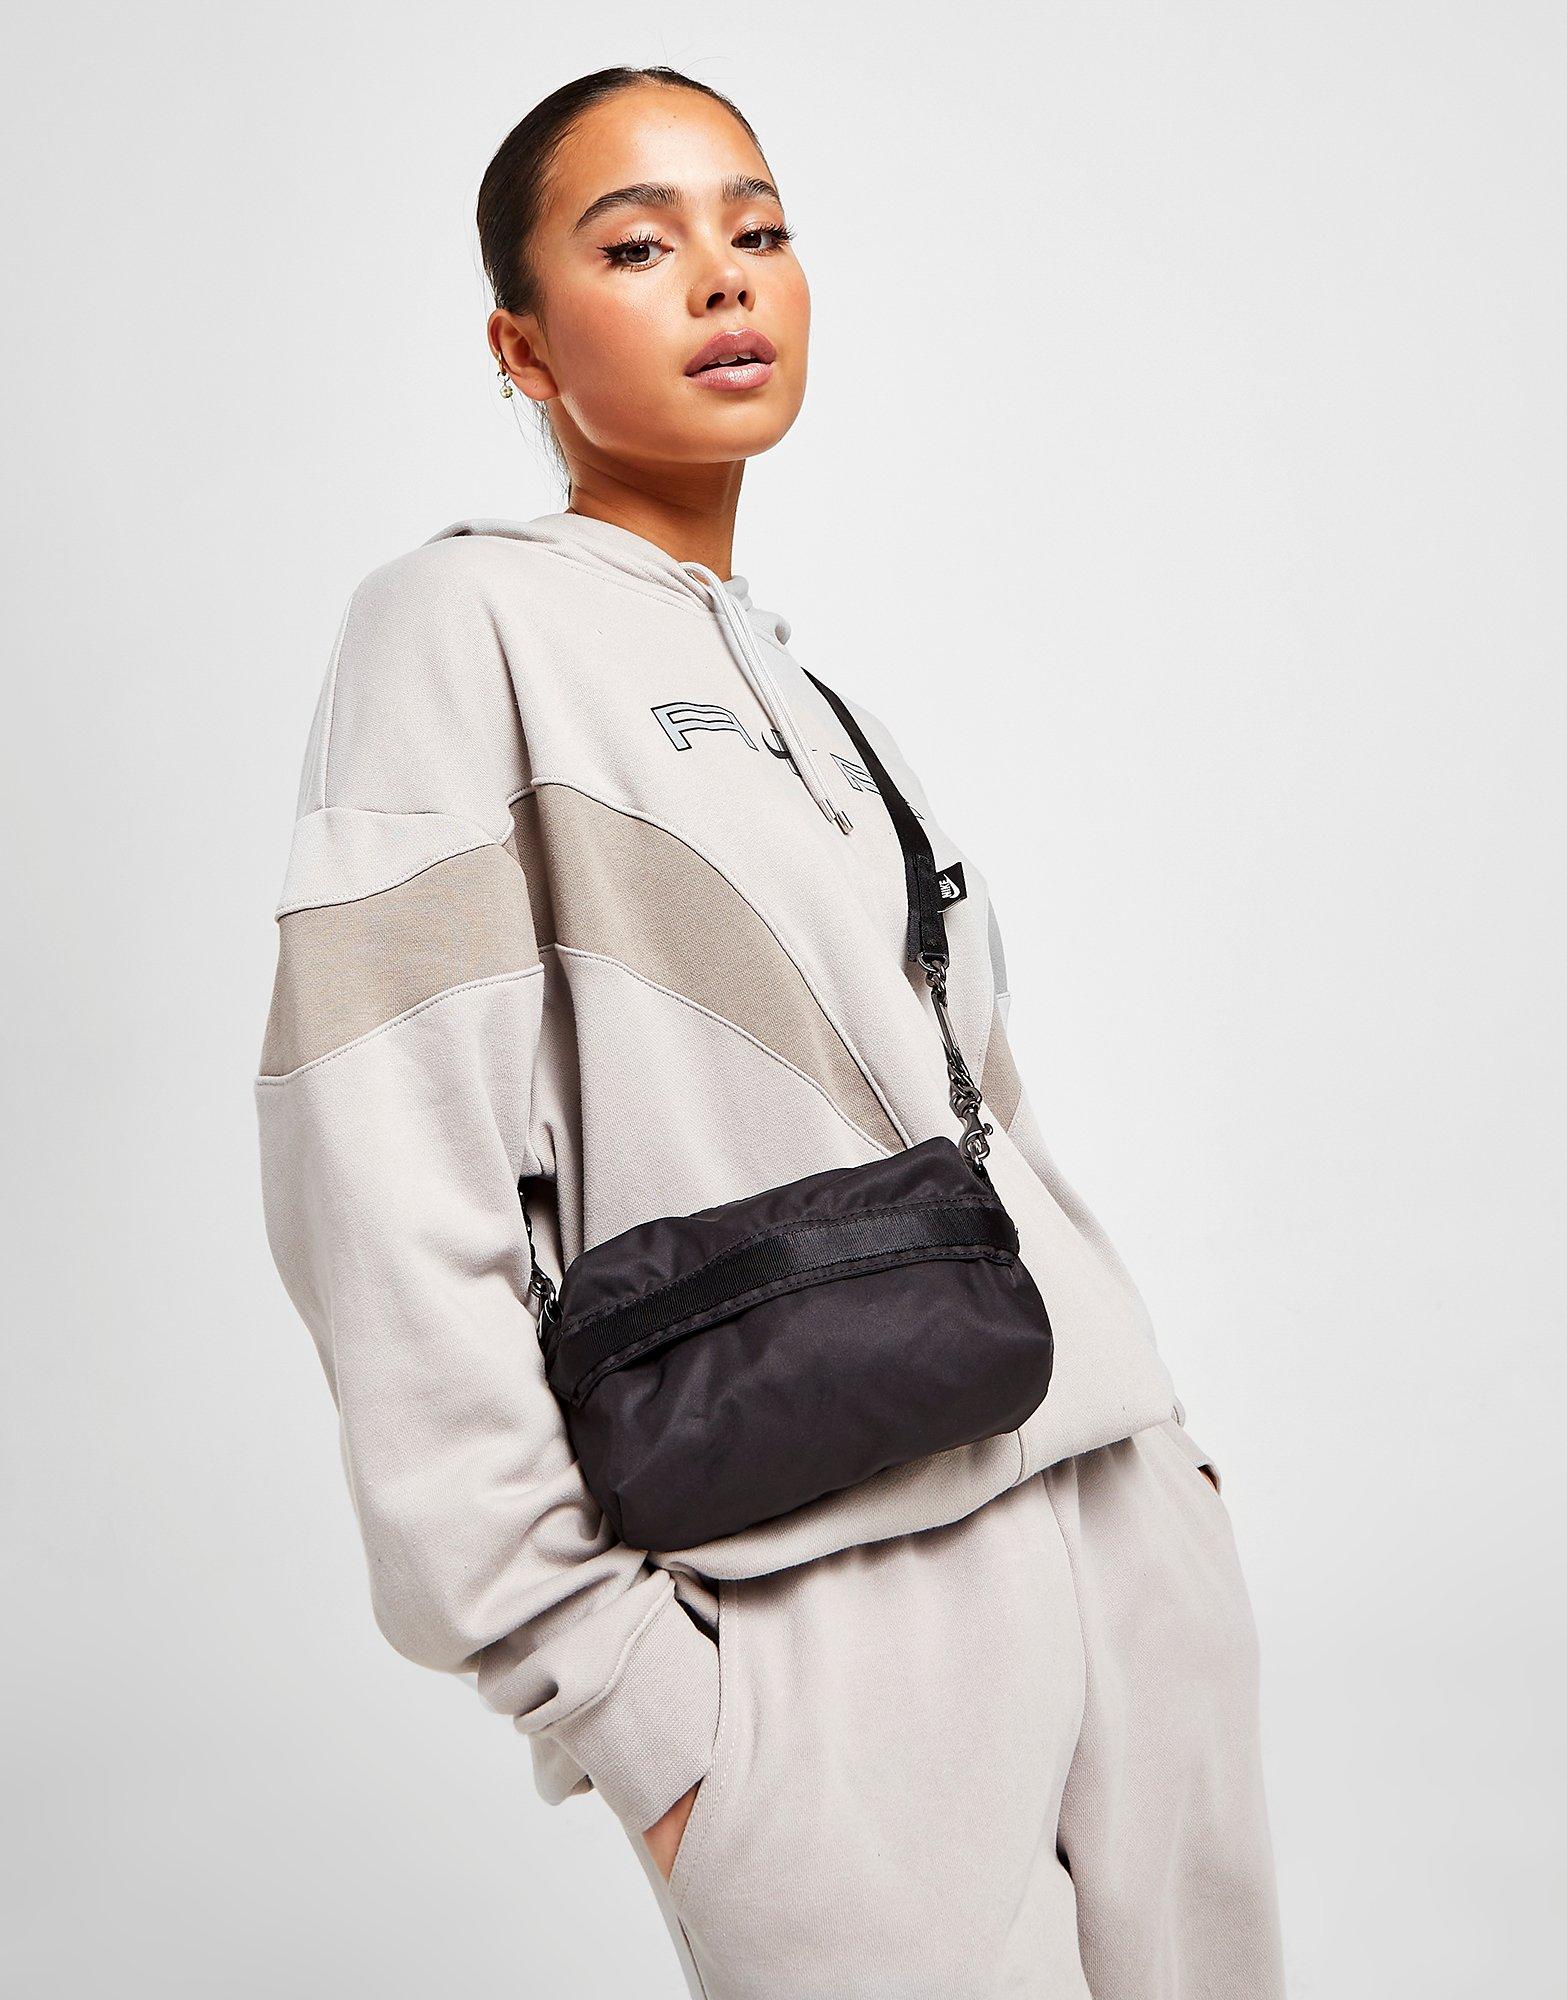 Black Nike Unisex Futura Crossbody Bag, Accessories